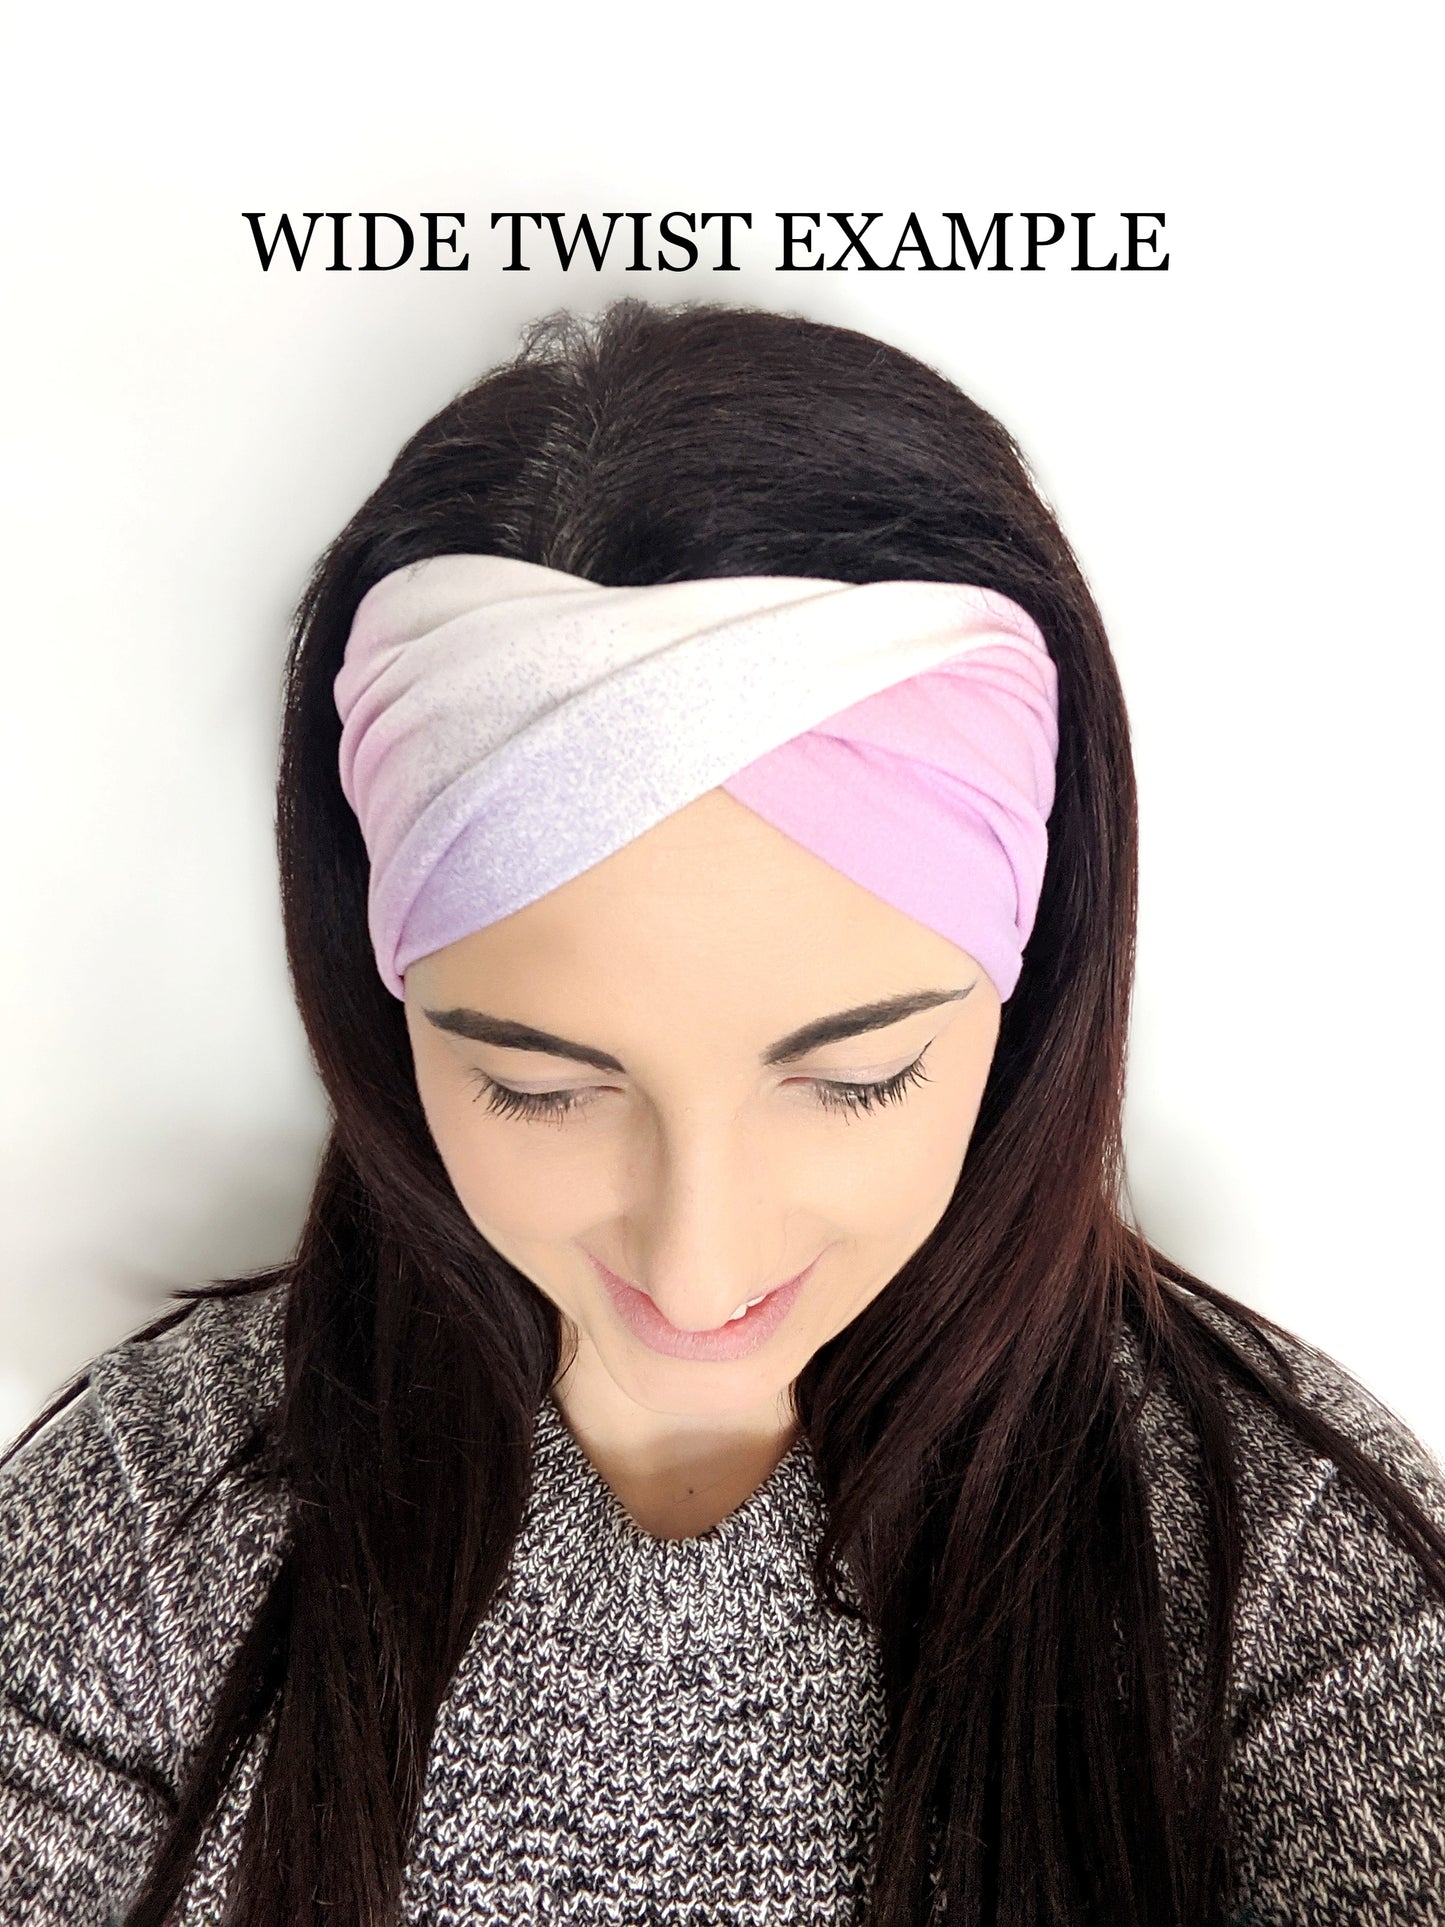 Ambulance Theme Medical Headband for Women | WIDE OR TURBAN TWIST